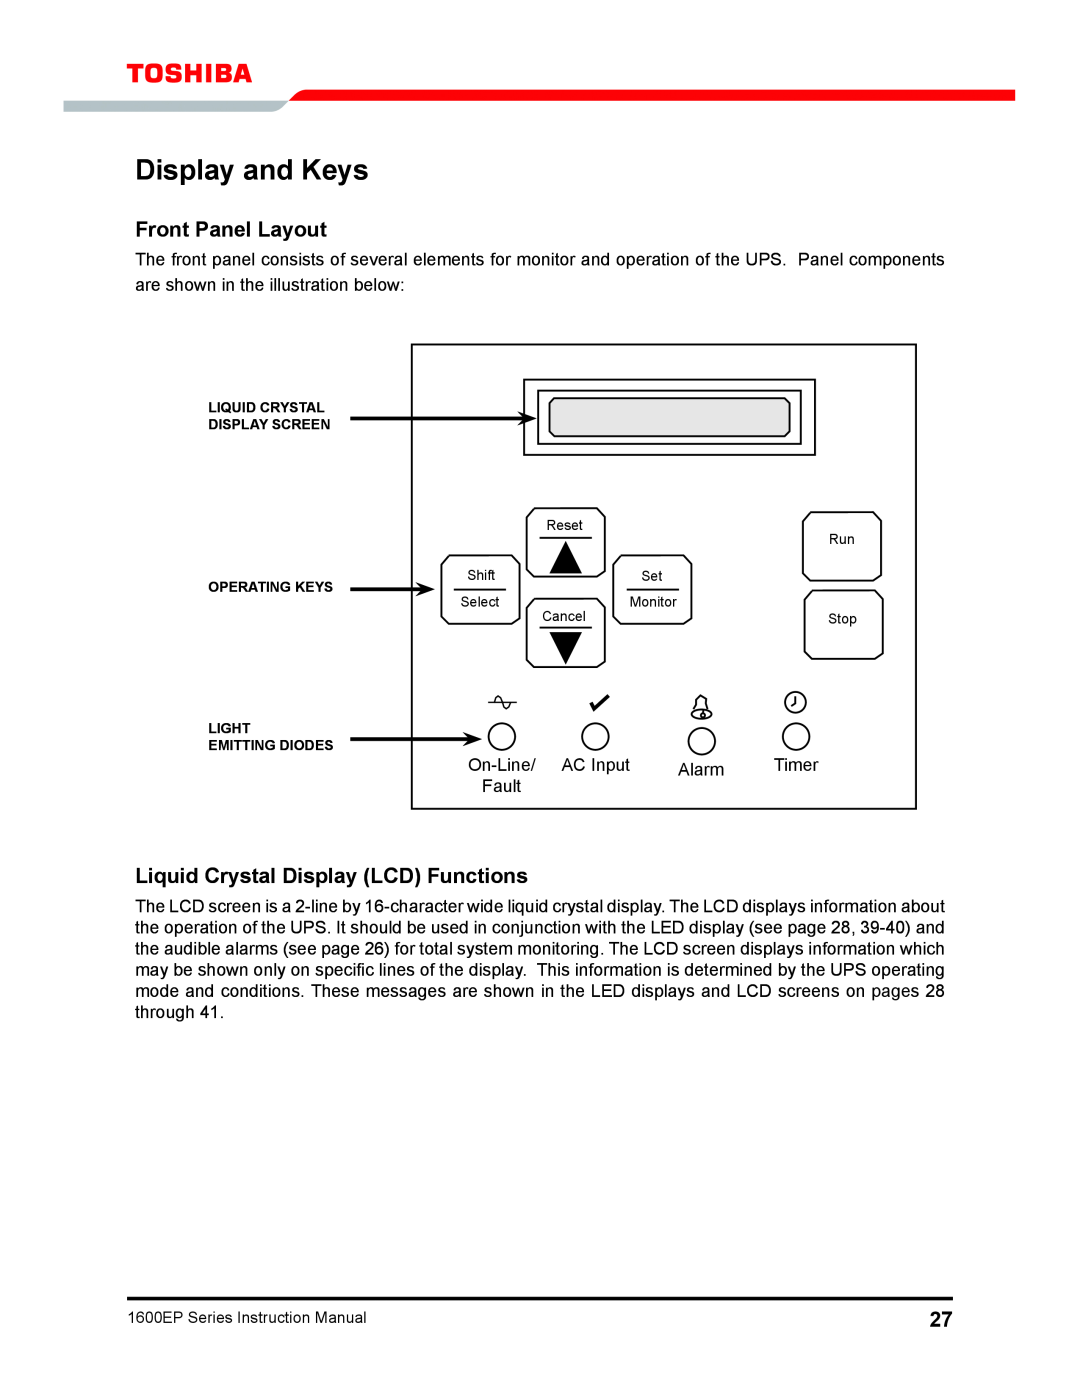 Toshiba 1600EP Series manual Display and Keys, Front Panel Layout, Liquid Crystal Display LCD Functions 